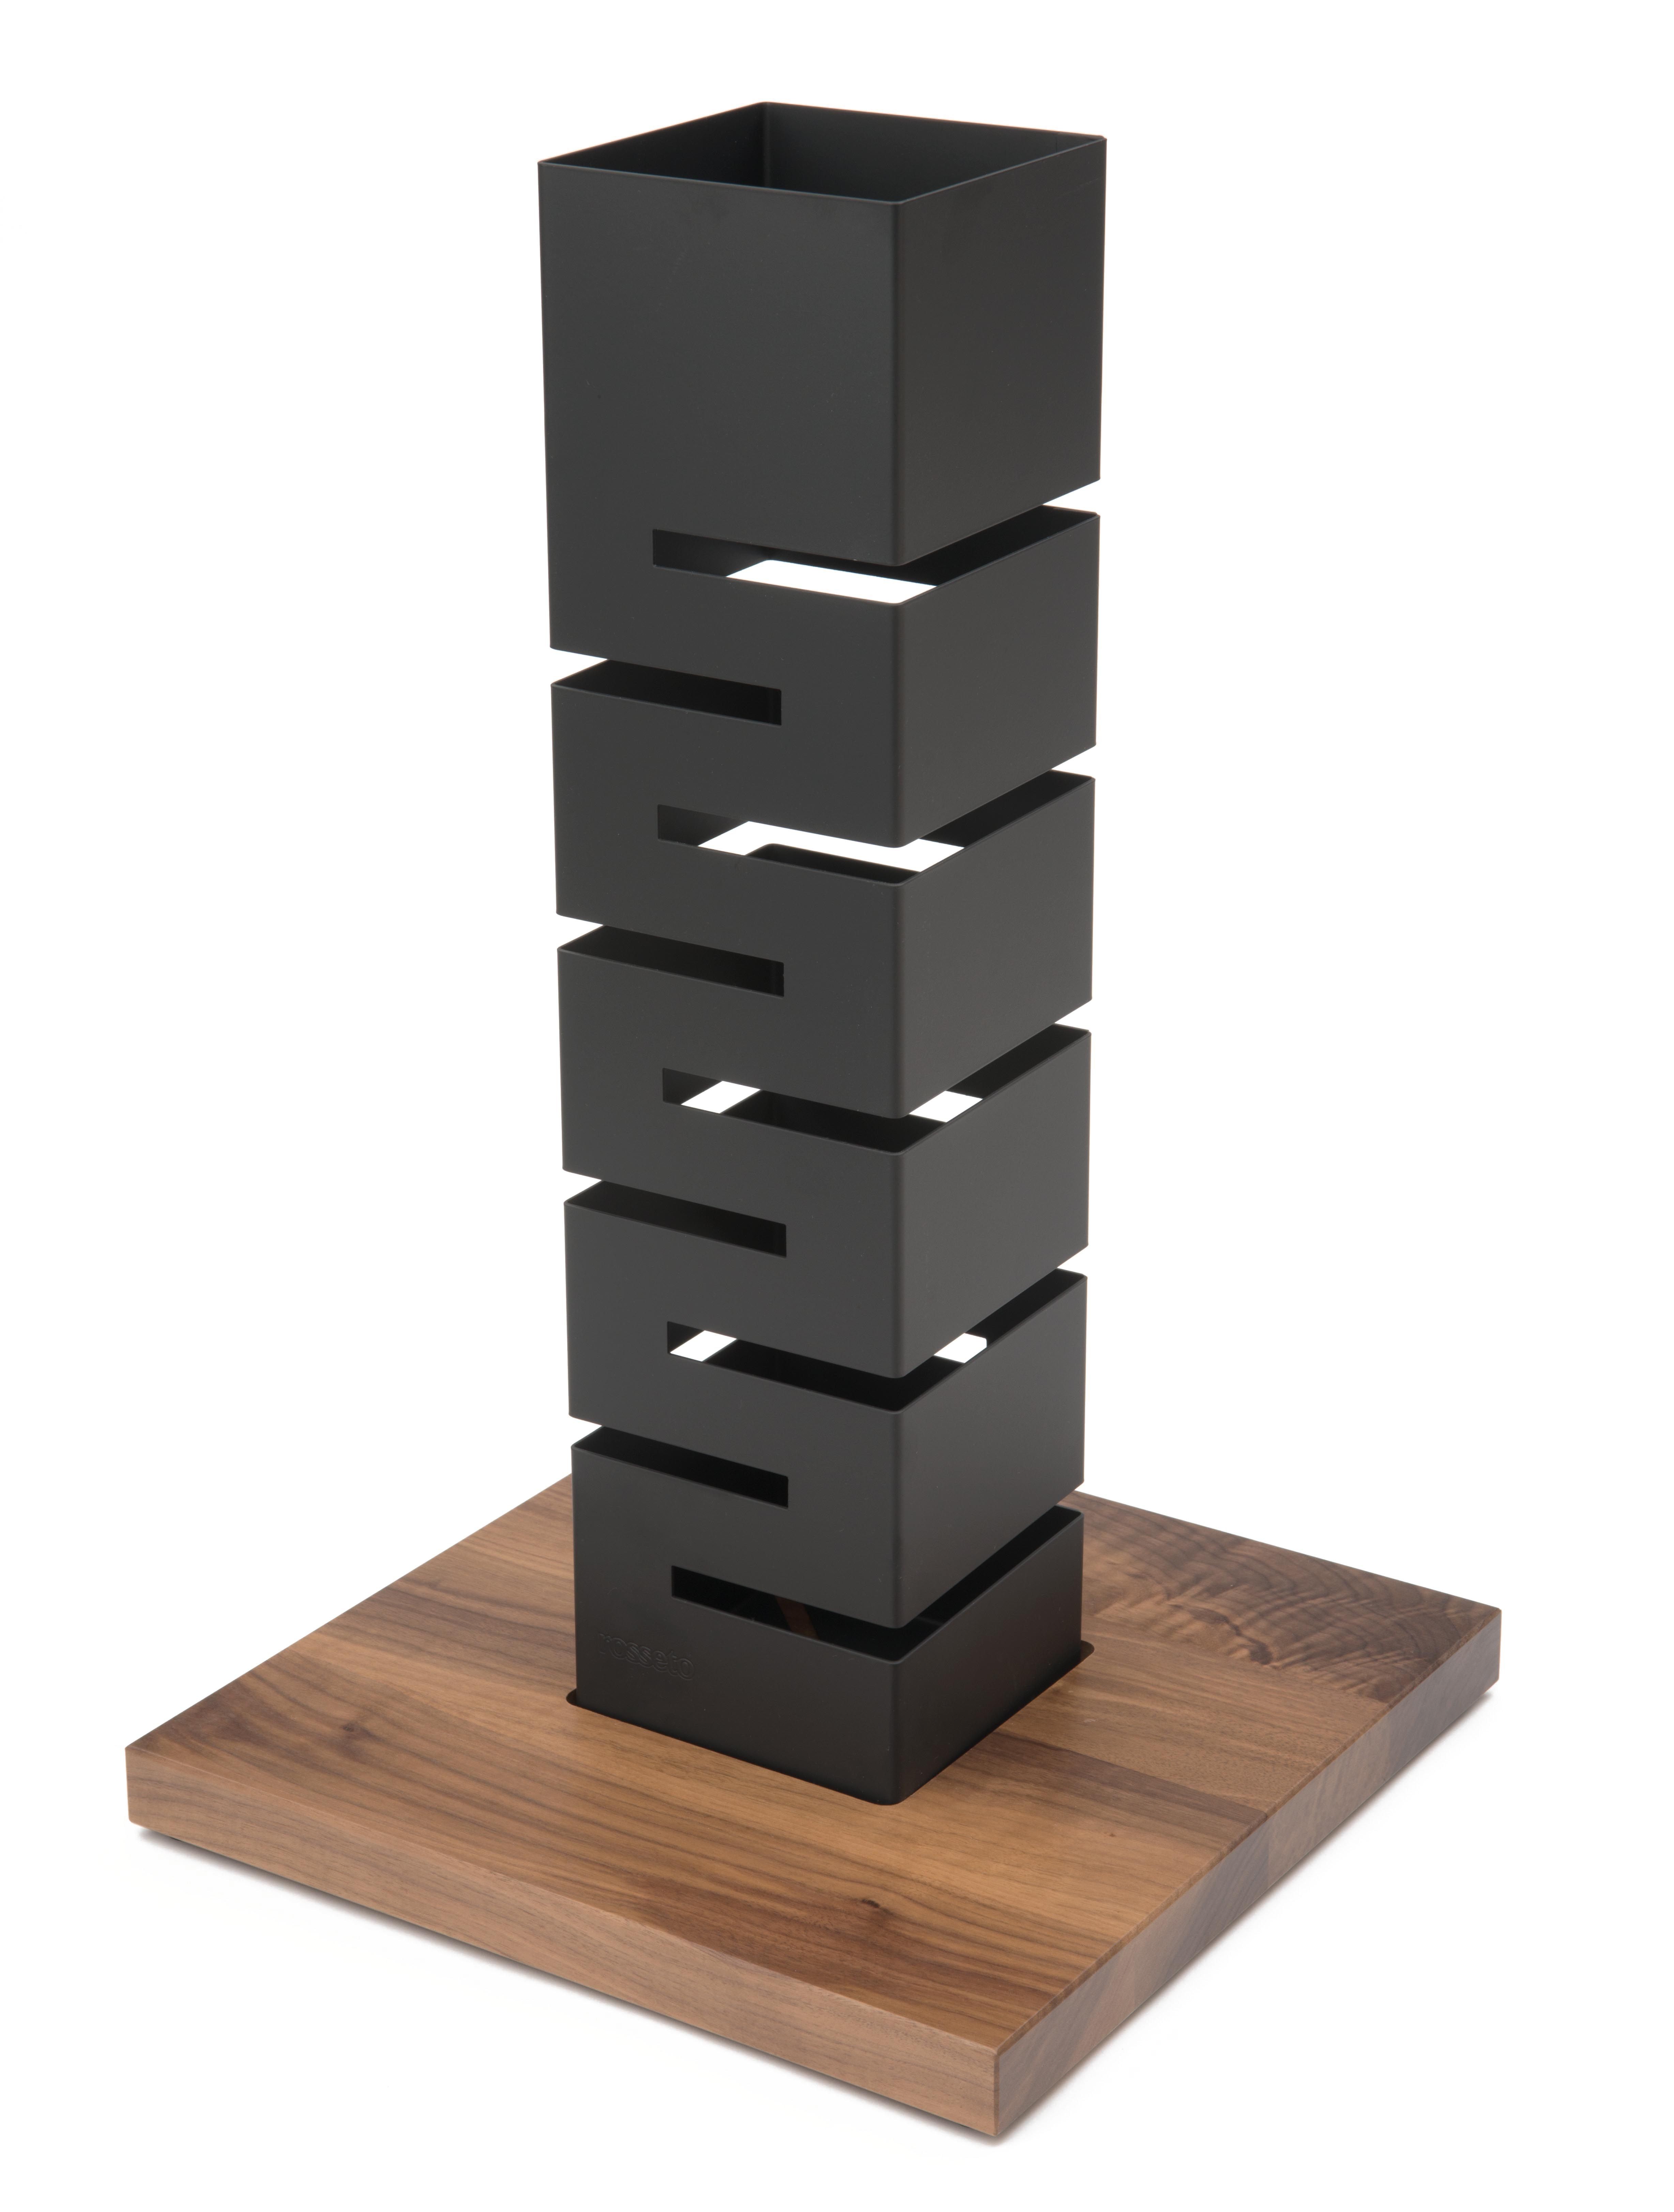 Rosseto SM160 SKYCAP Black Matte Steel Tall Column Multi-Level Riser with Walnut Base 13.75" x 13.75" x 22.5"H